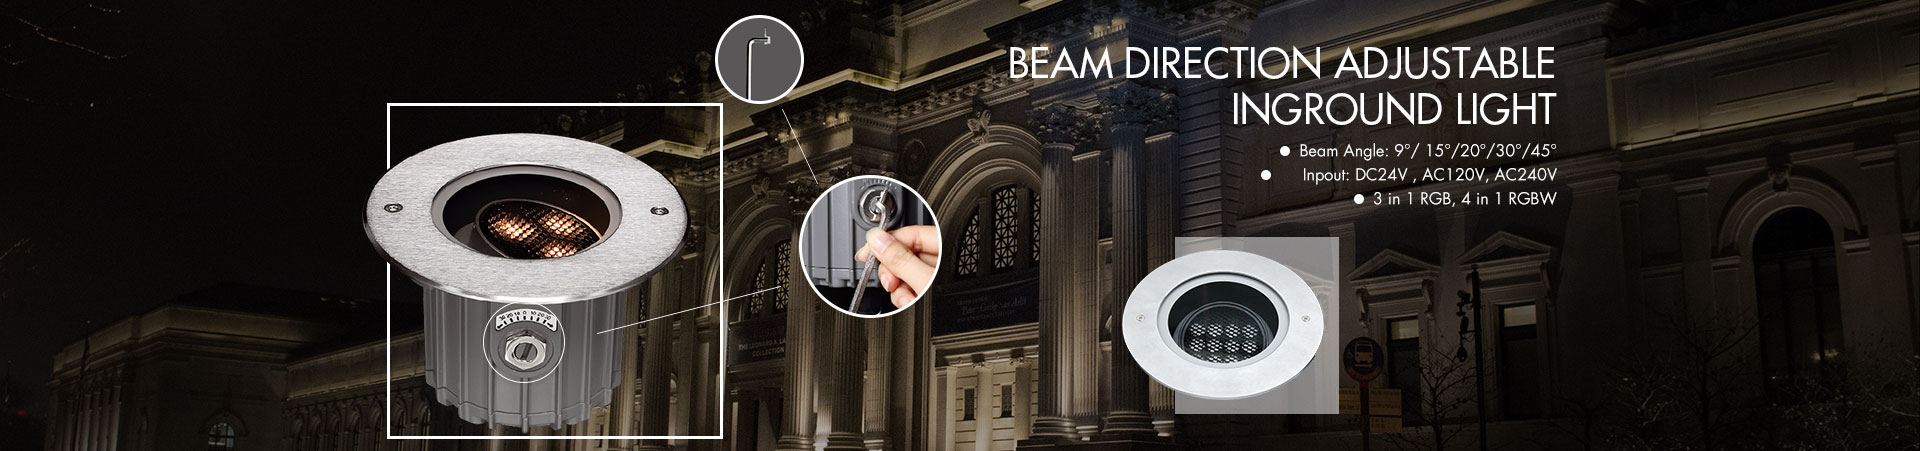 Beam Direction Adjustable Inground Light